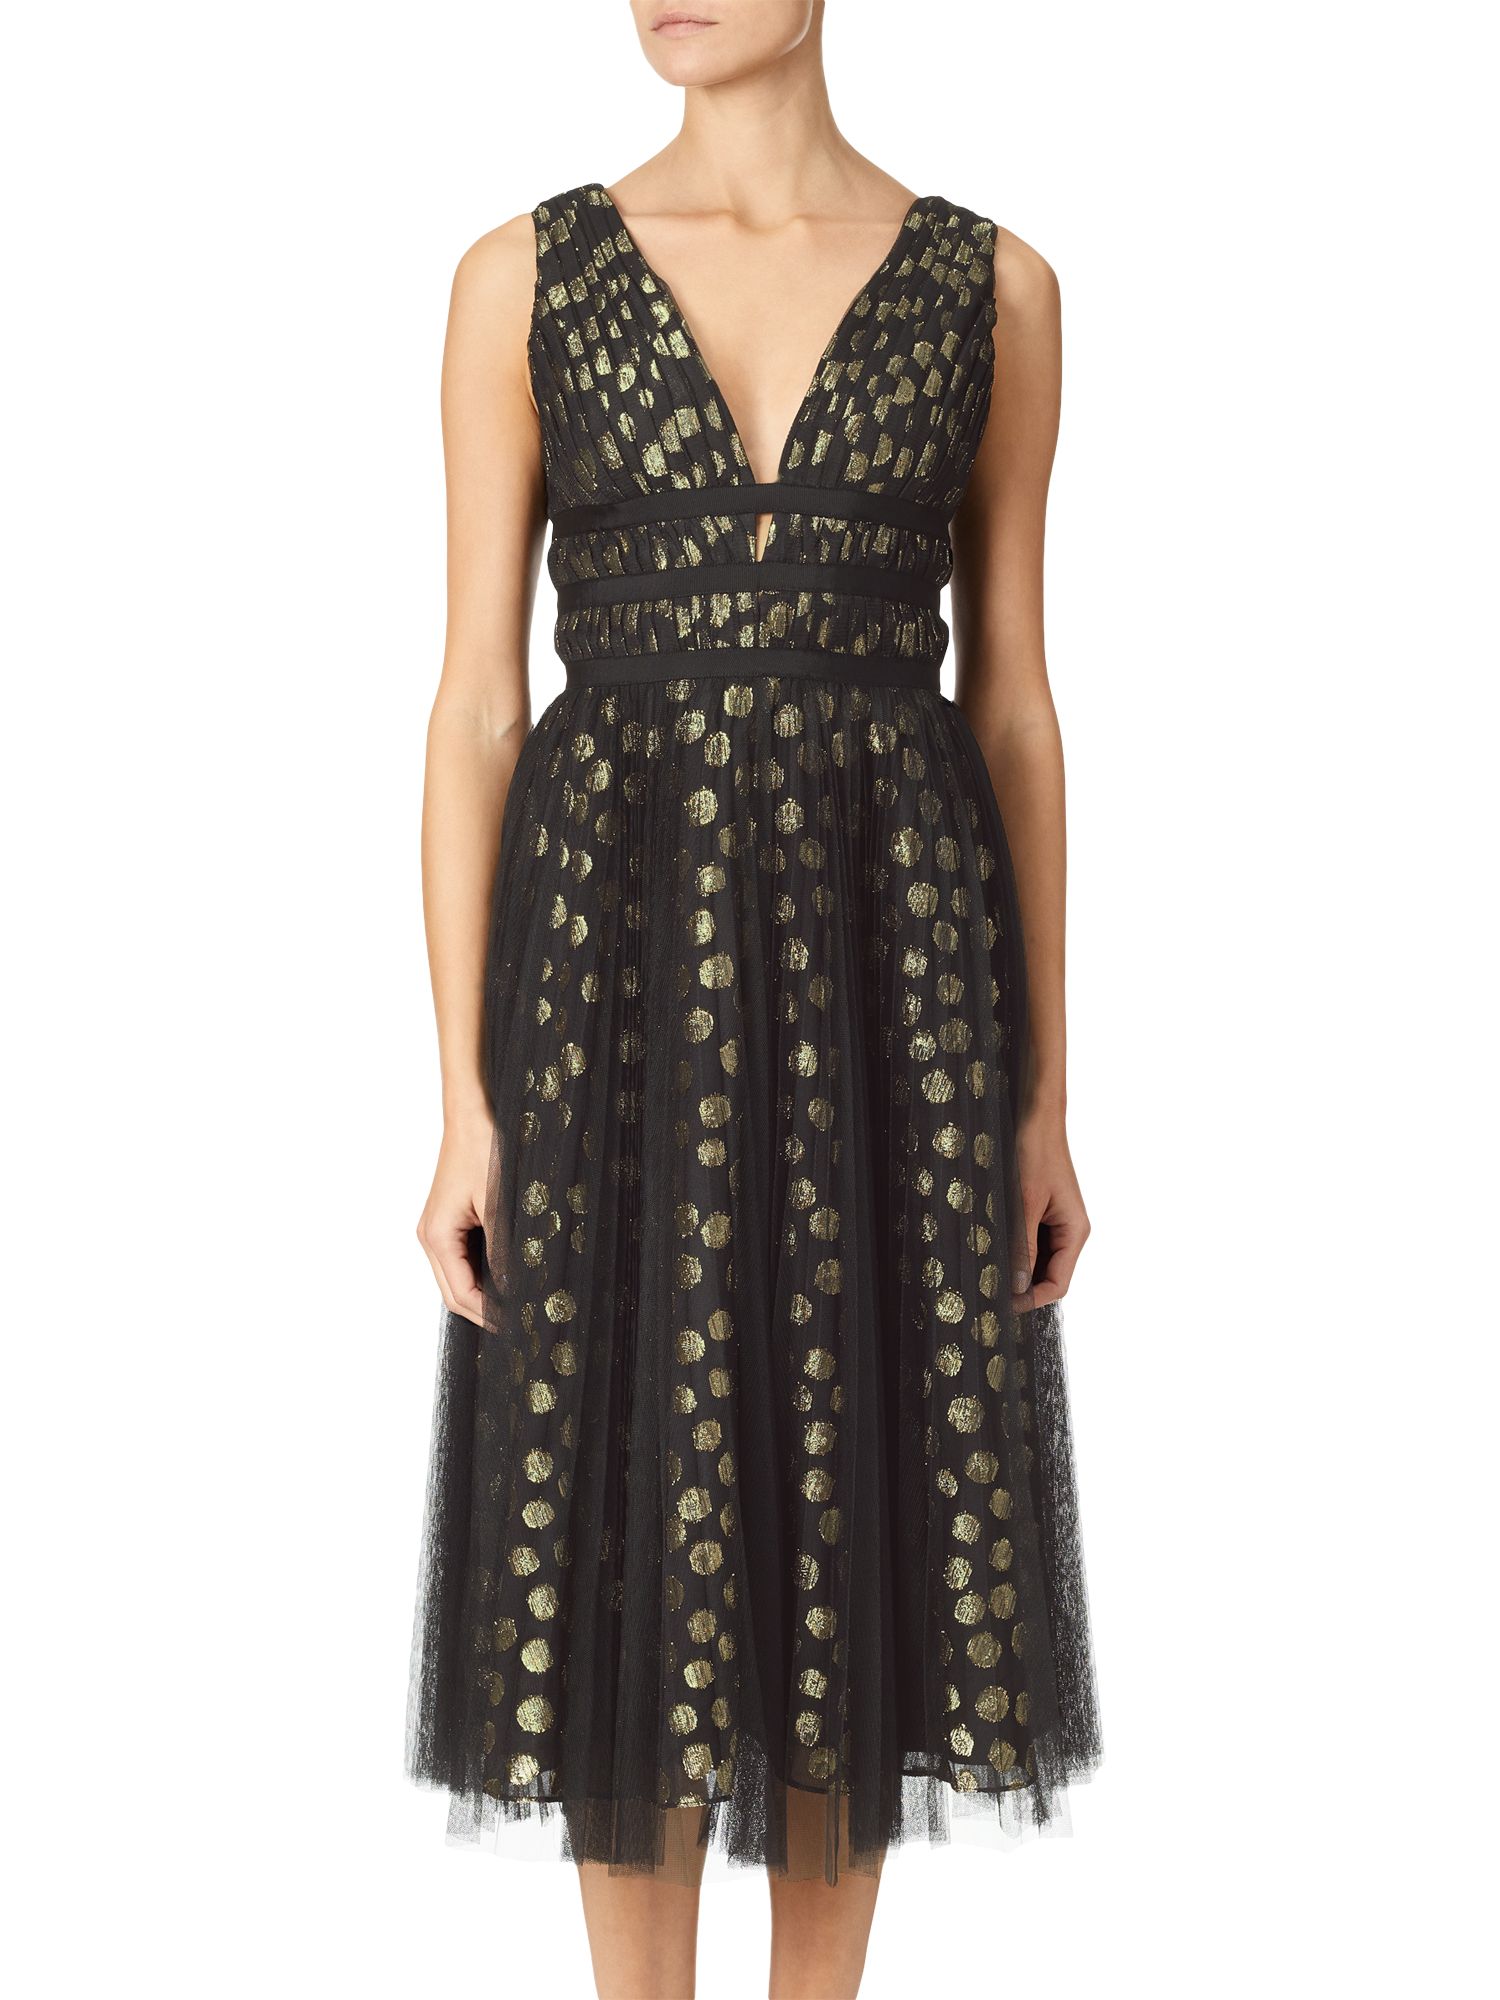 Adrianna Papell Clip Dot Dress, Black/Gold